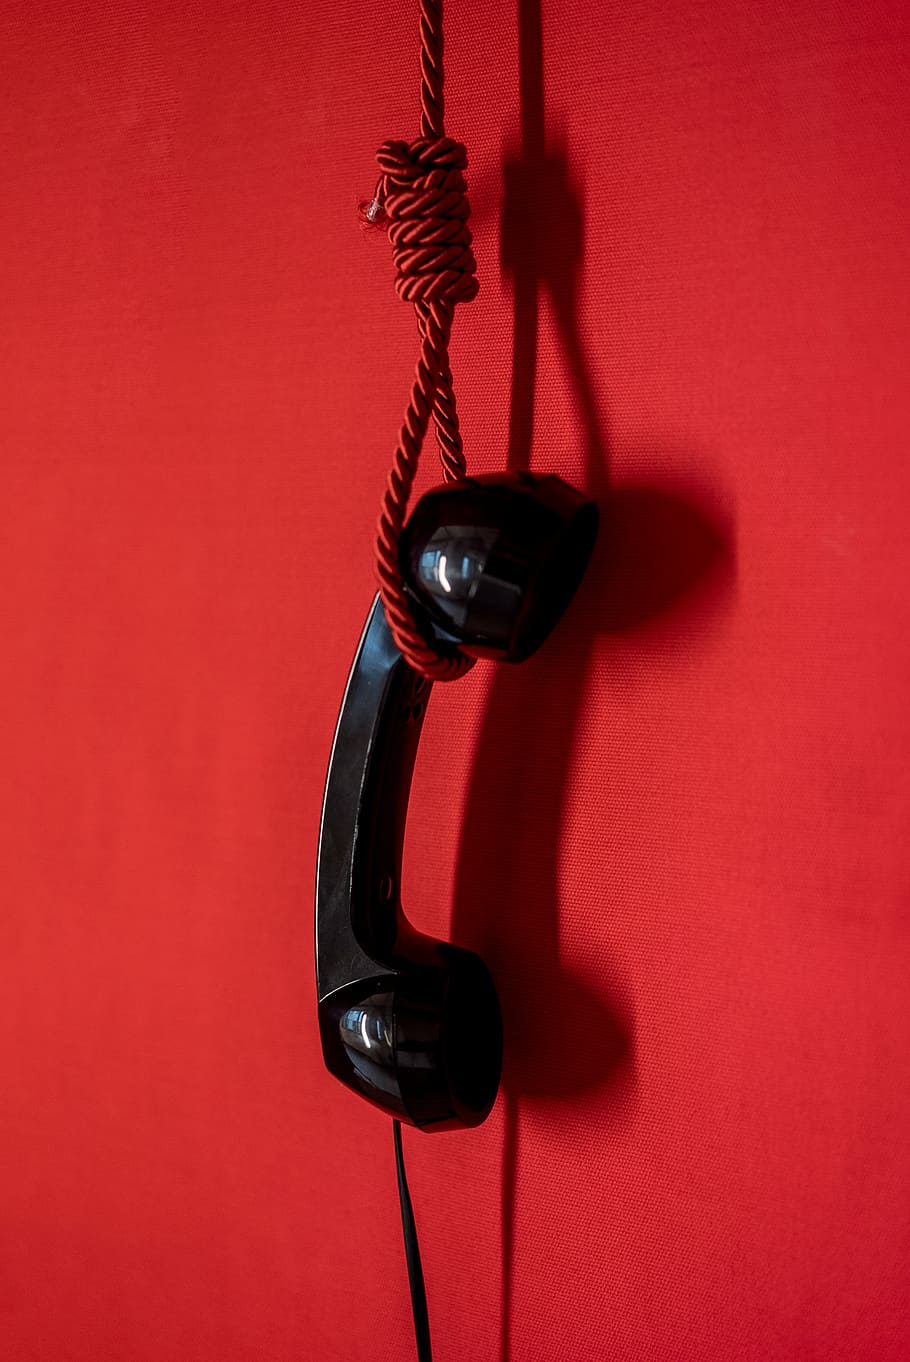 telepon bunuh diri hitam, telepon umum, jerat, teknologi, gantung, panggilan telepon, telepon, gagang telepon, seni, pesan